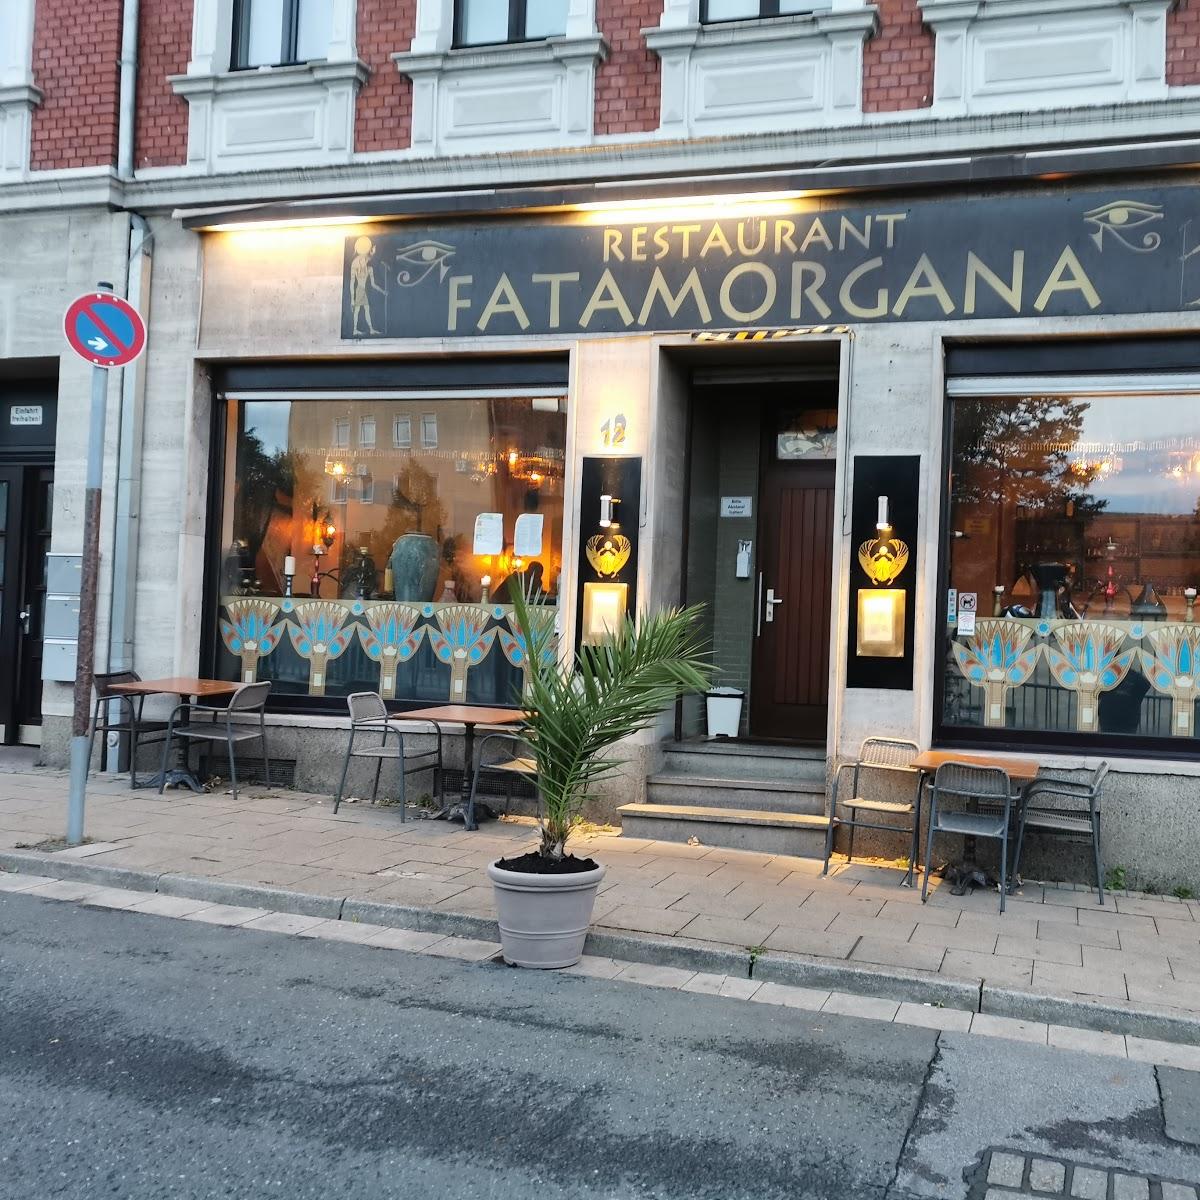 Restaurant "Restaurant Fatamorgana" in  Ruhr